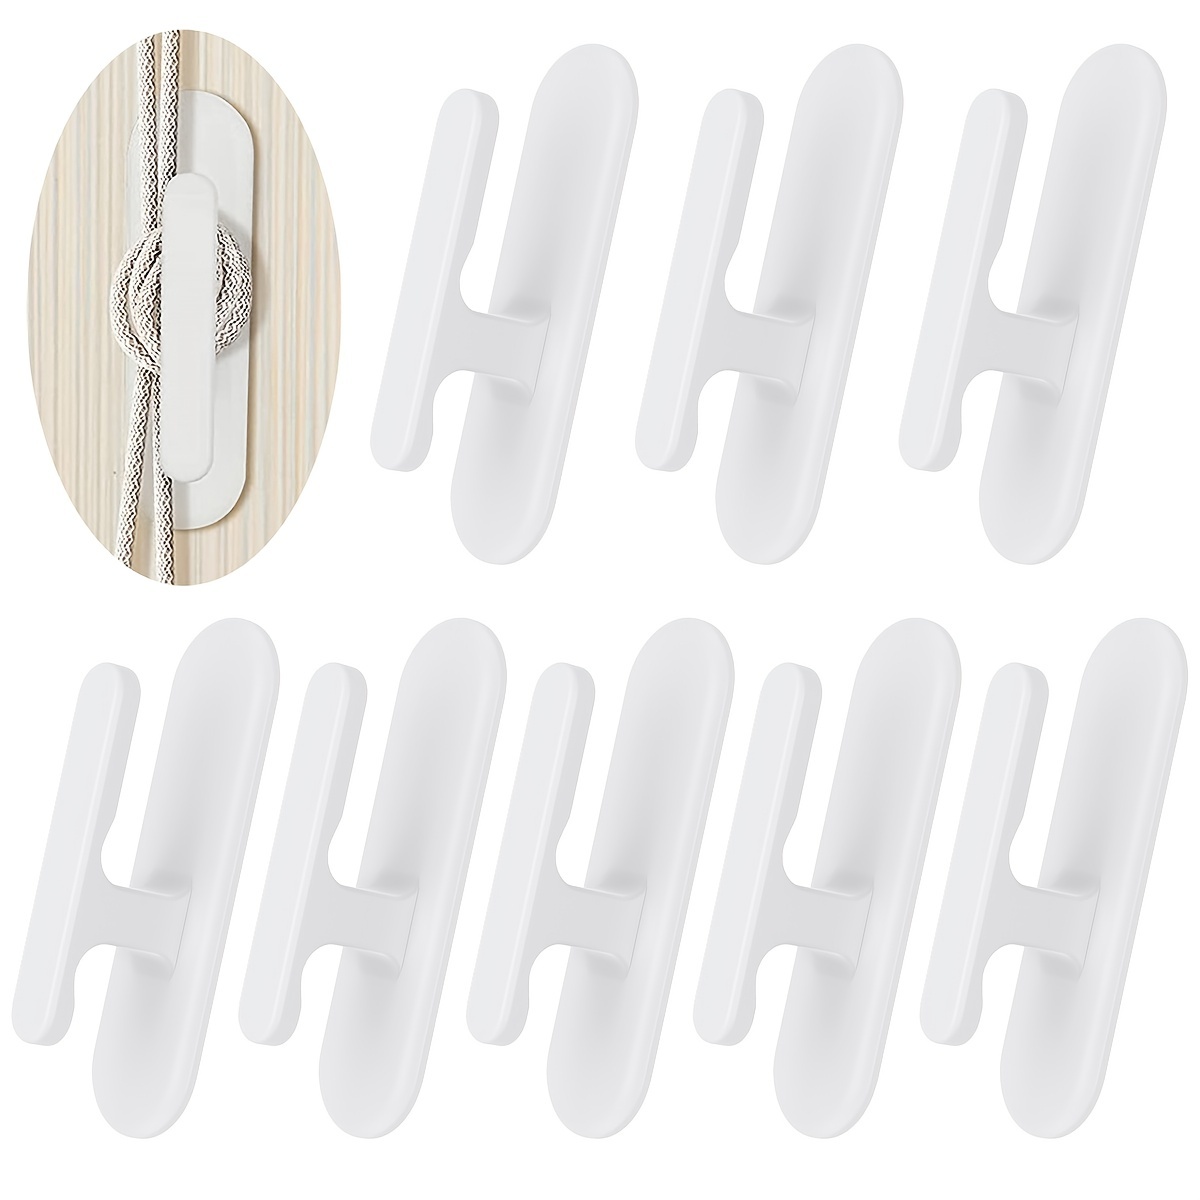 8Pcs Blind Cord Twisters Self-Adhesive Blind Cord Winder Plastic